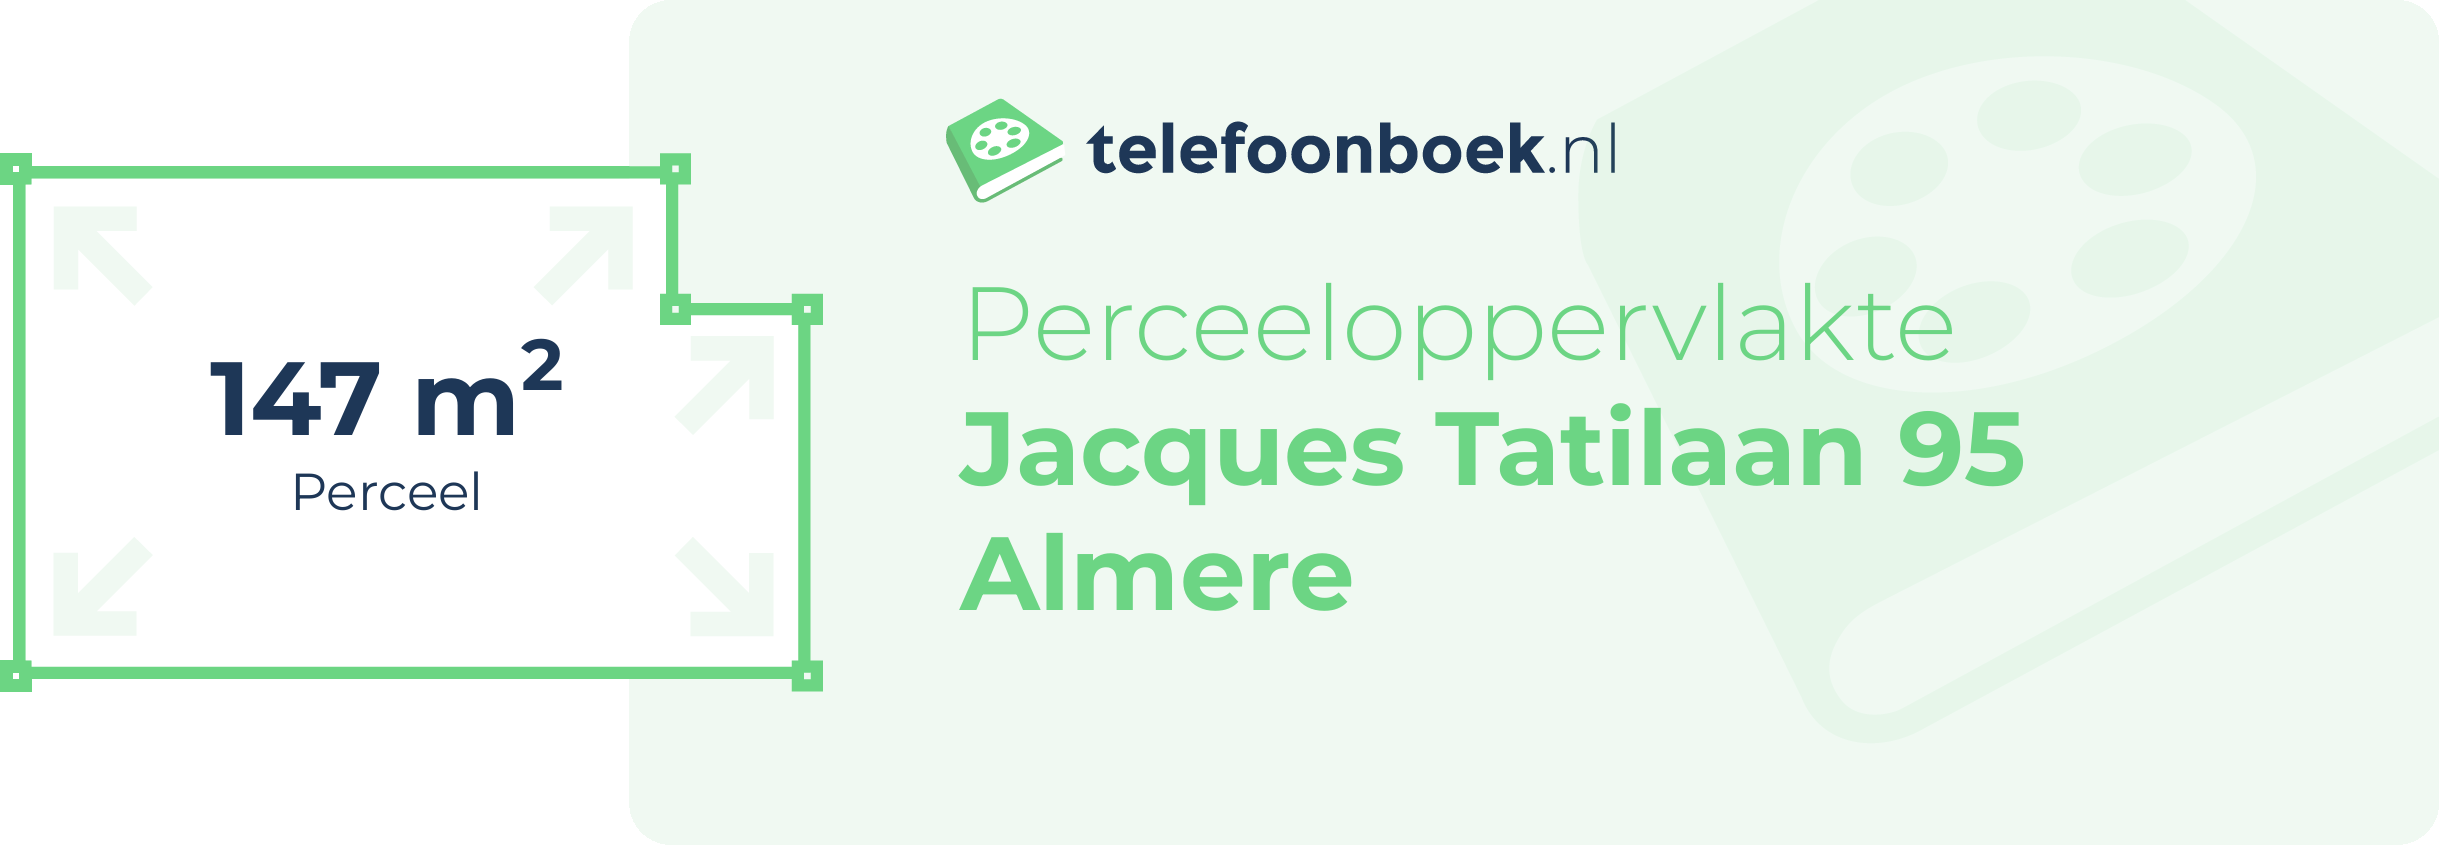 Perceeloppervlakte Jacques Tatilaan 95 Almere